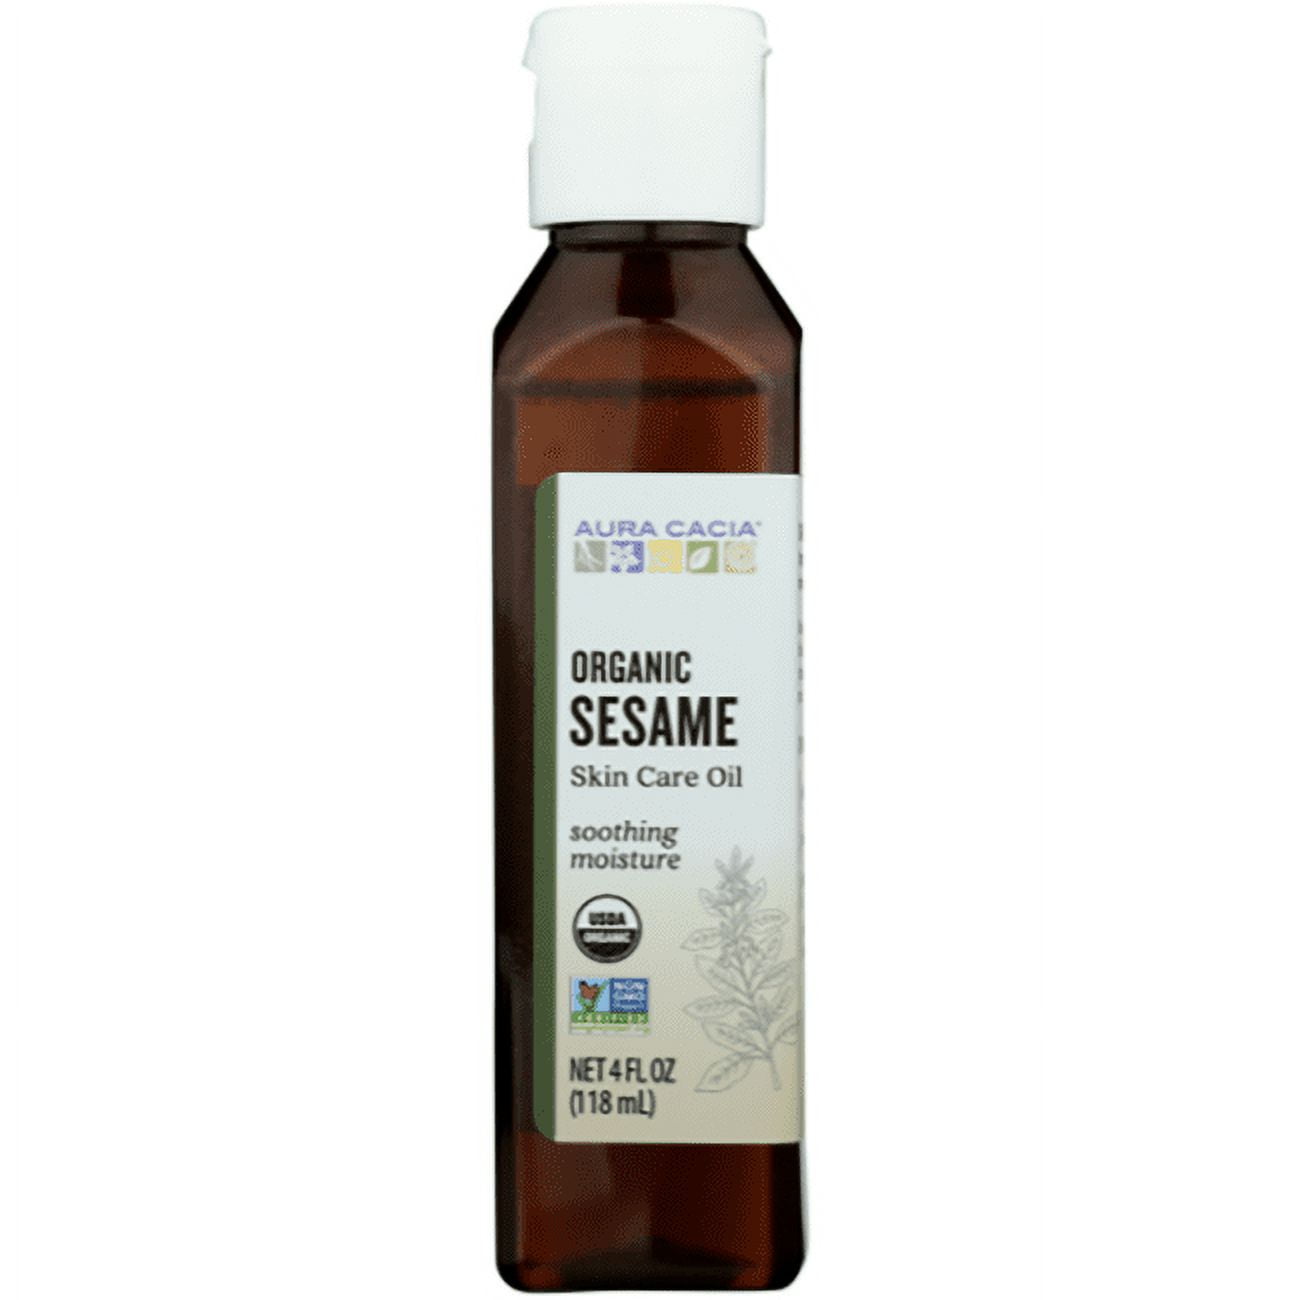 Aura Cacia Organic Sesame Skin Care Oil 4 oz Bottle